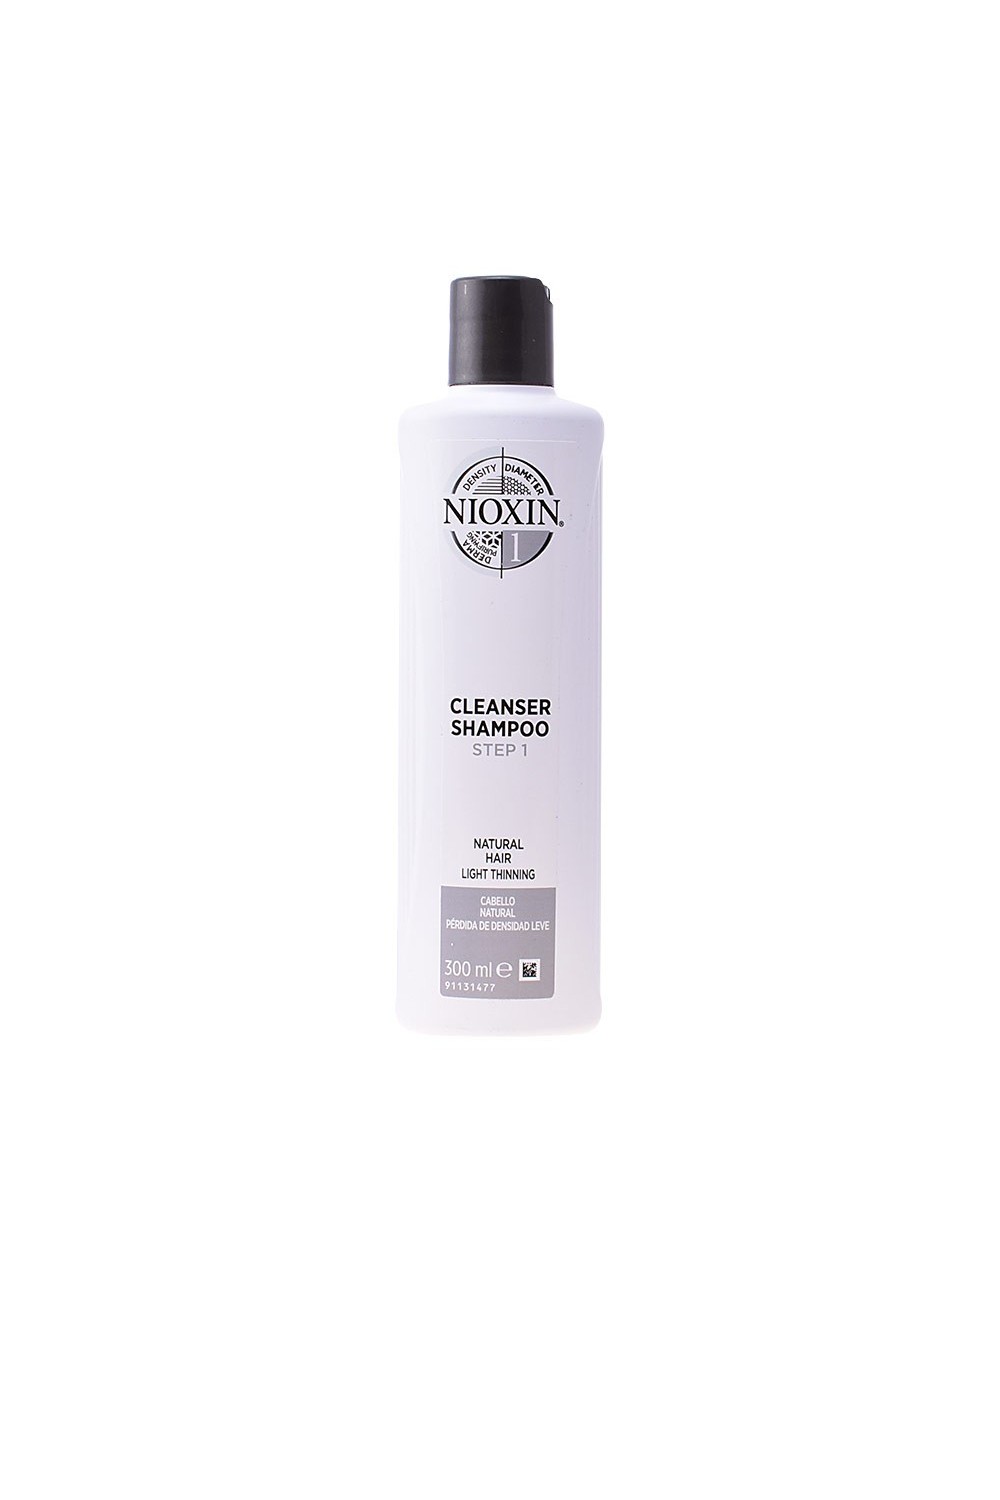 Nioxin System 1 Shampoo Volumizing Weak Fine Hair 300ml